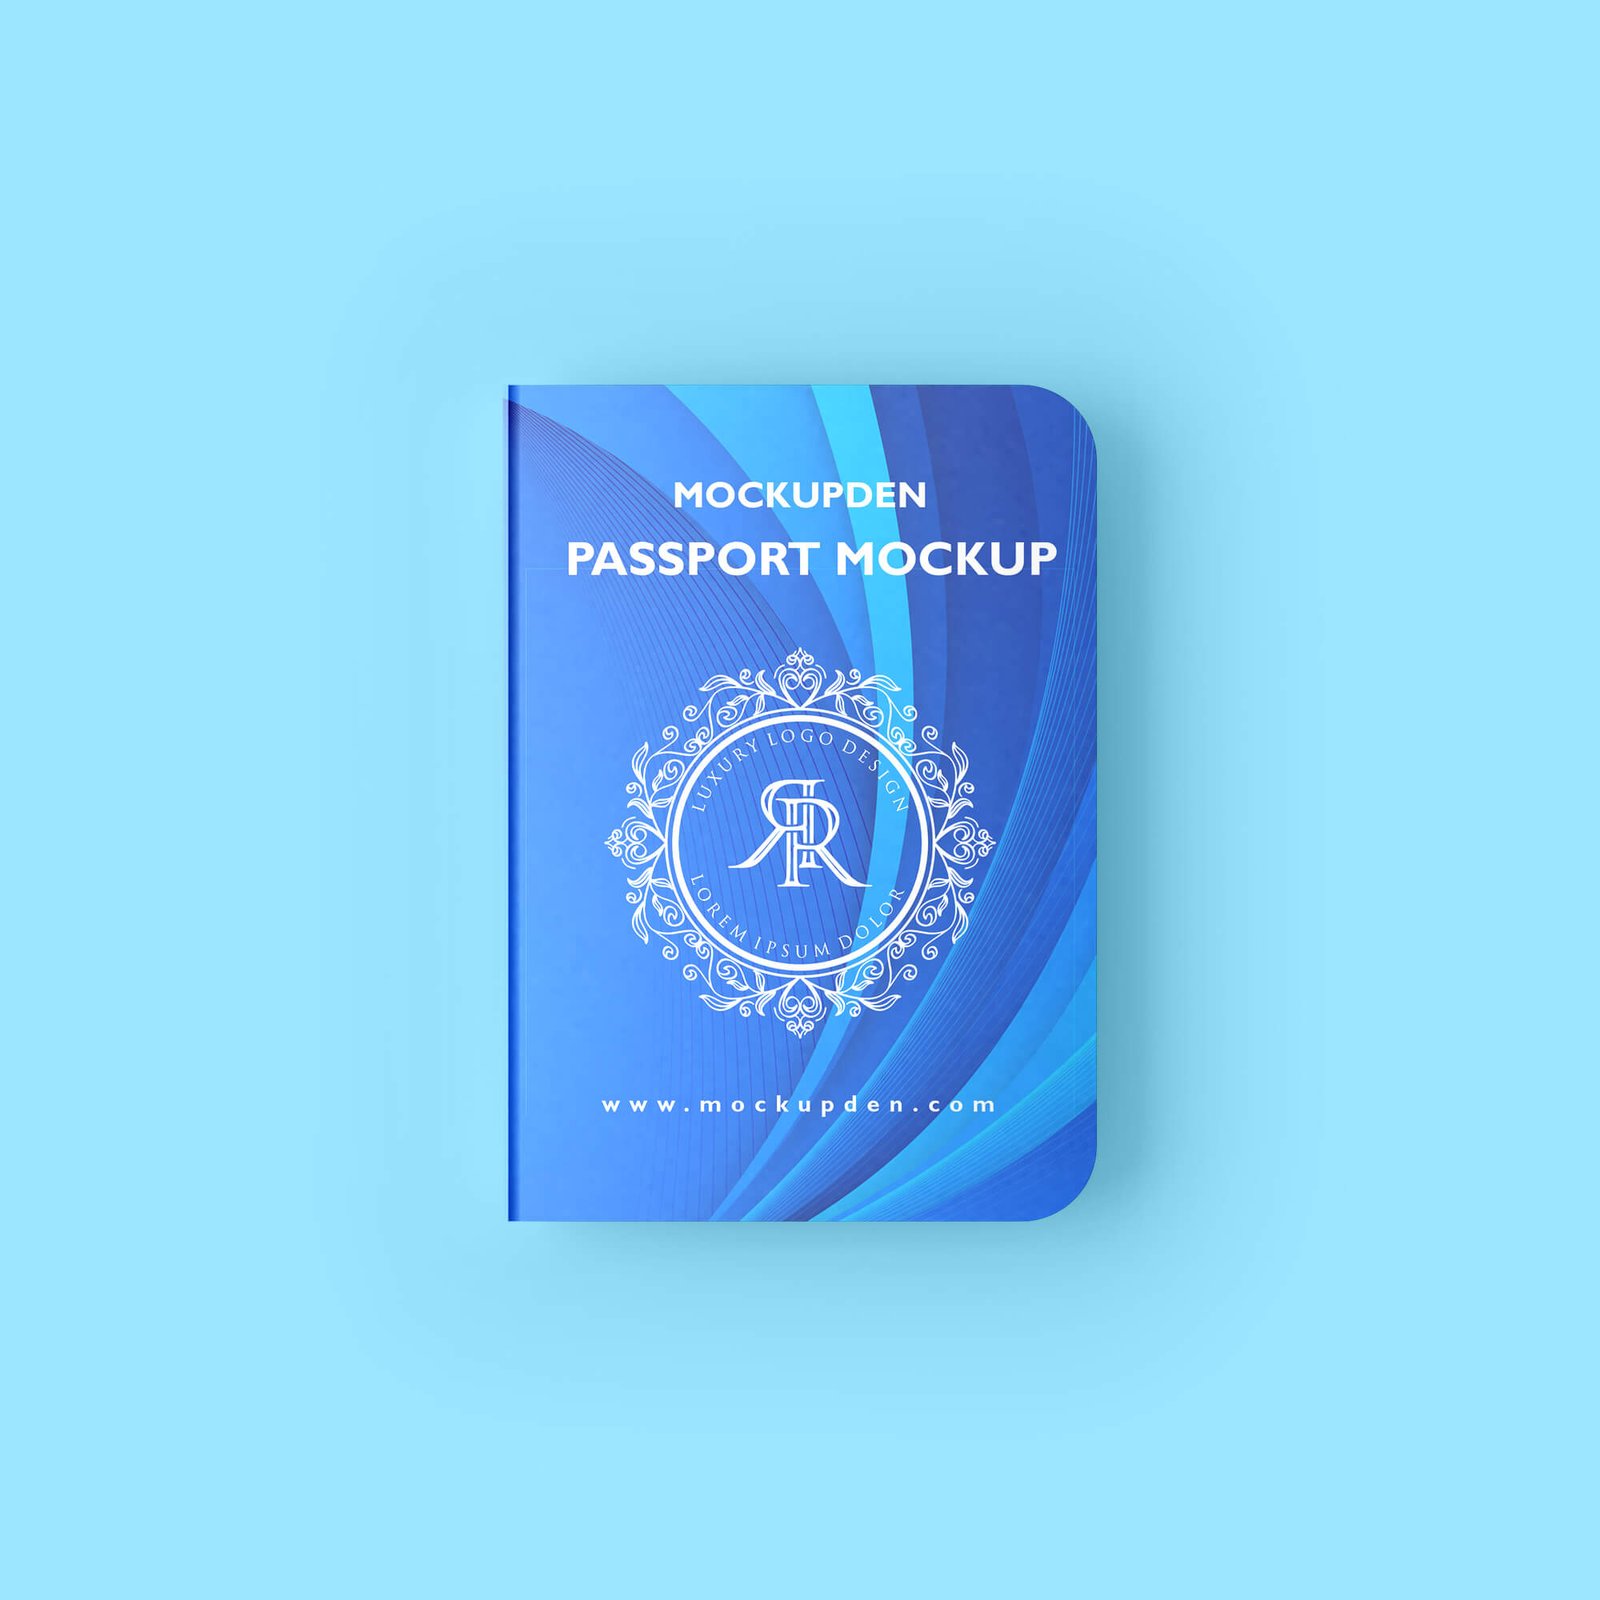 Design Free Passport Mockup PSD Template